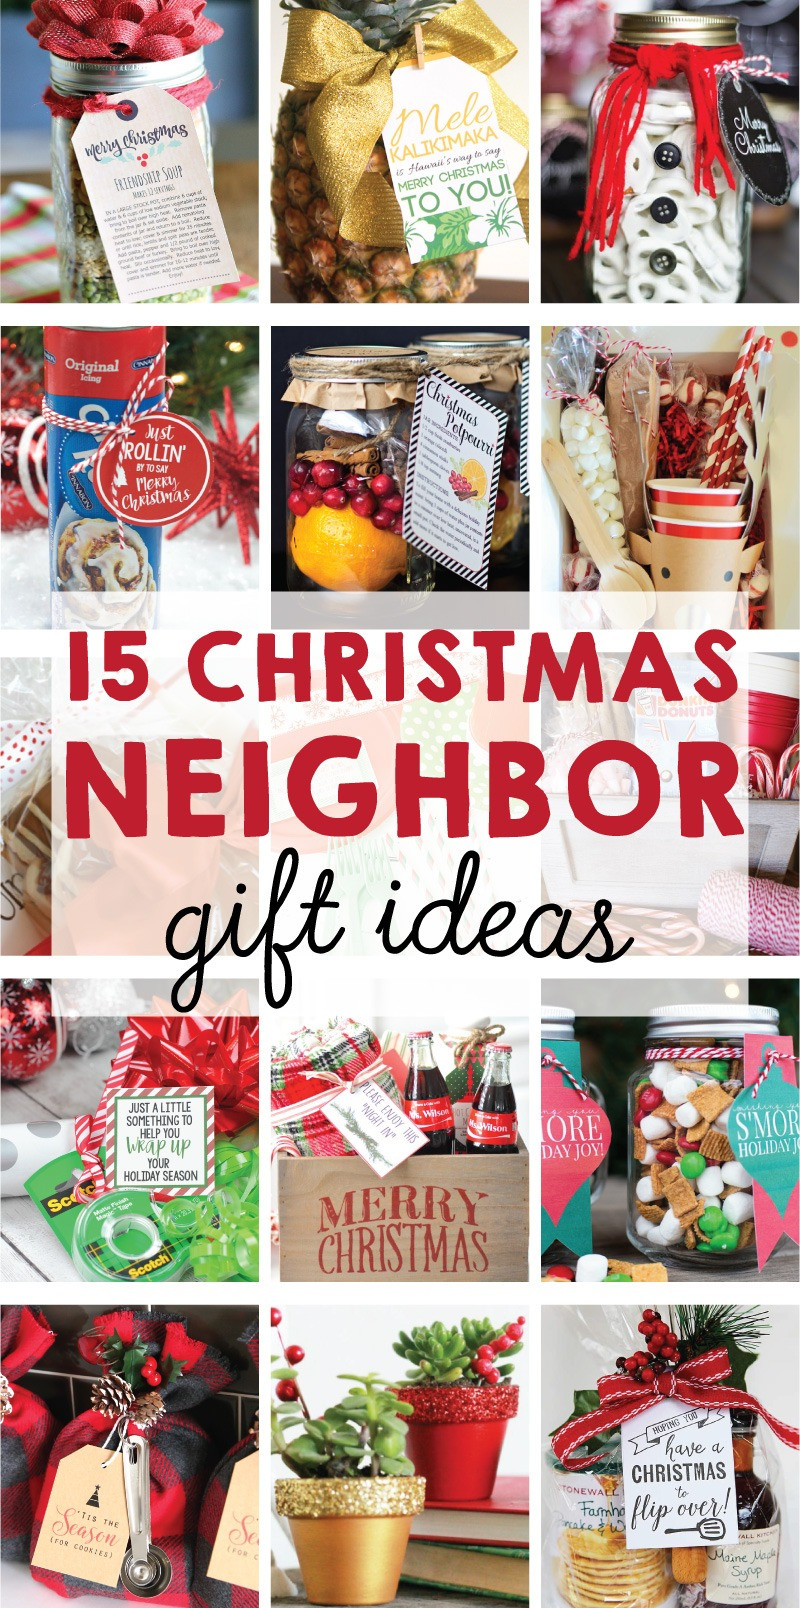 Neighborhood Christmas Gift Ideas
 The BEST 15 Christmas Neighbor Gift Ideas on Love the Day